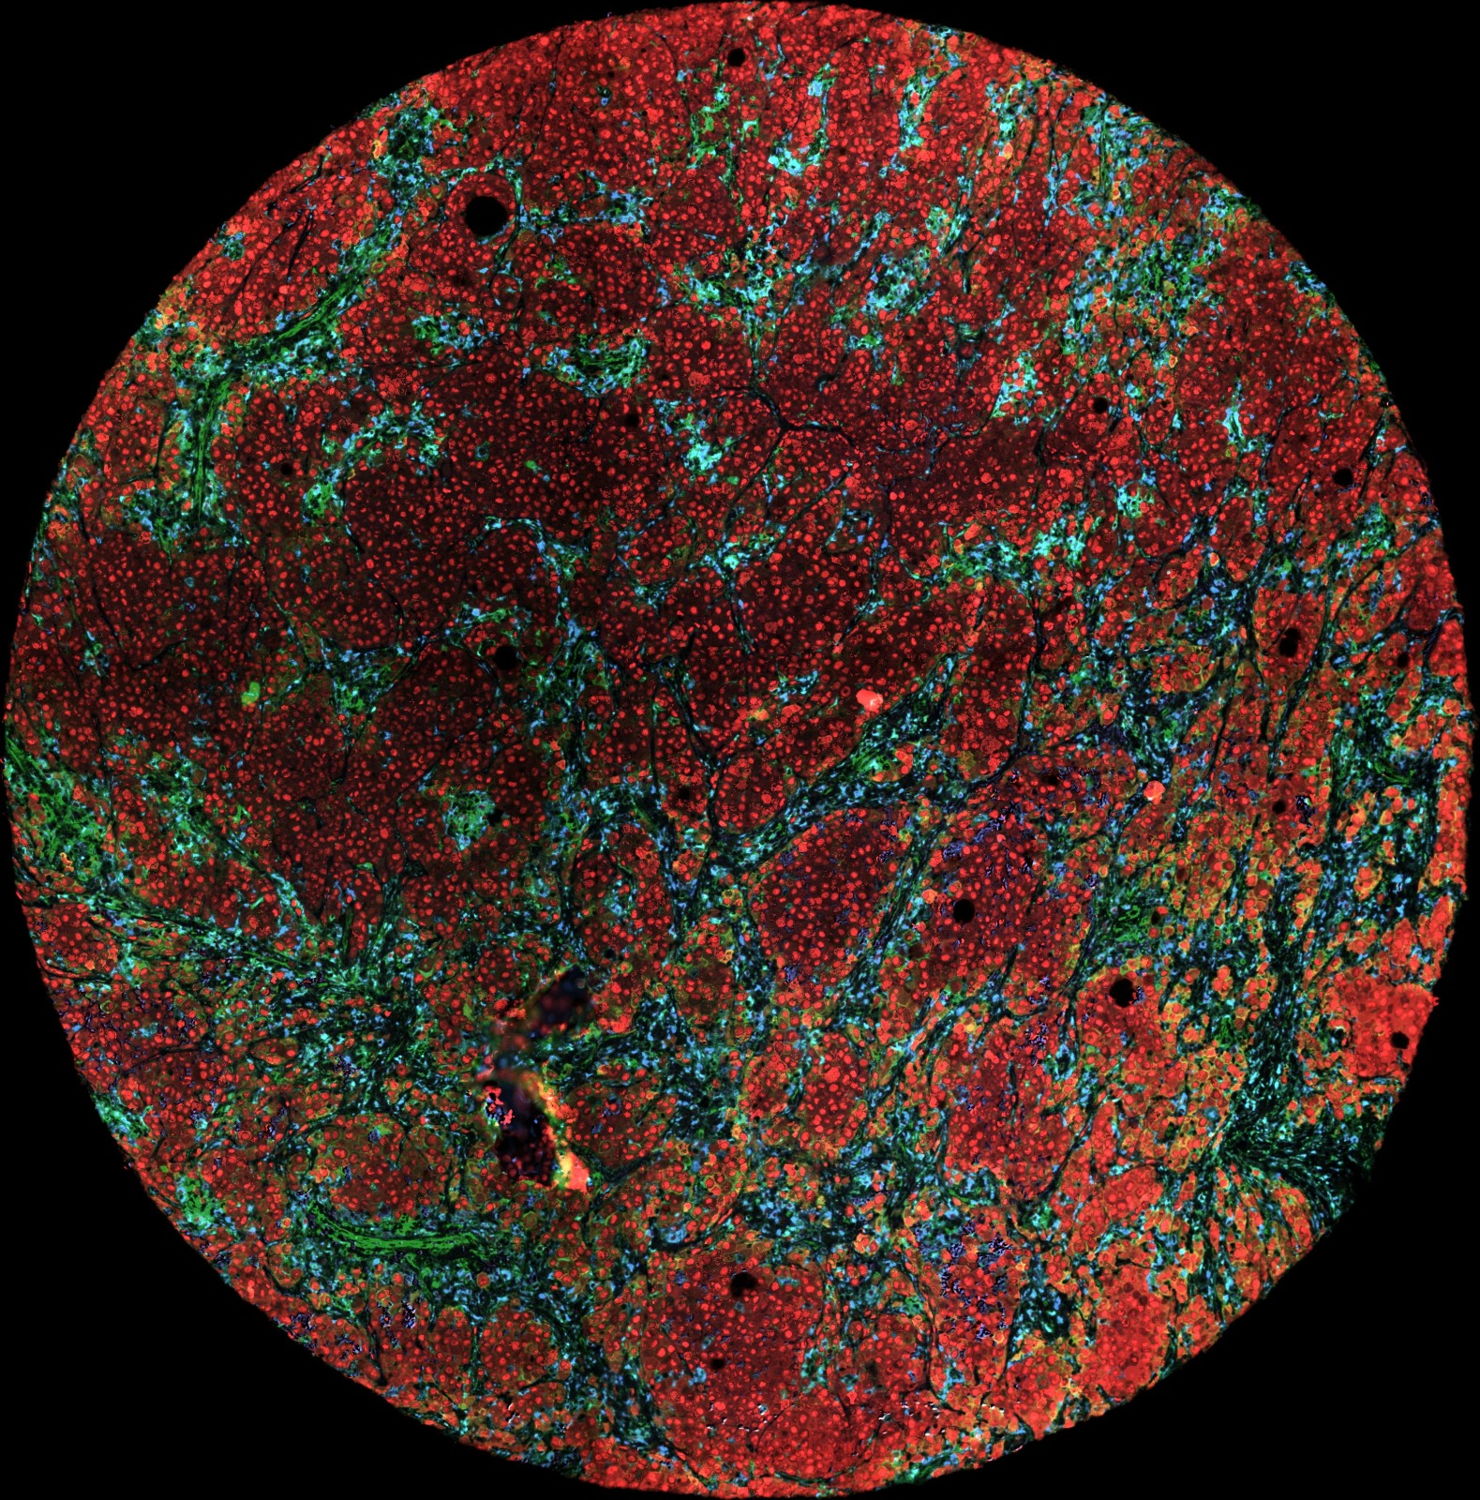 Microscopy image of human melanoma cells